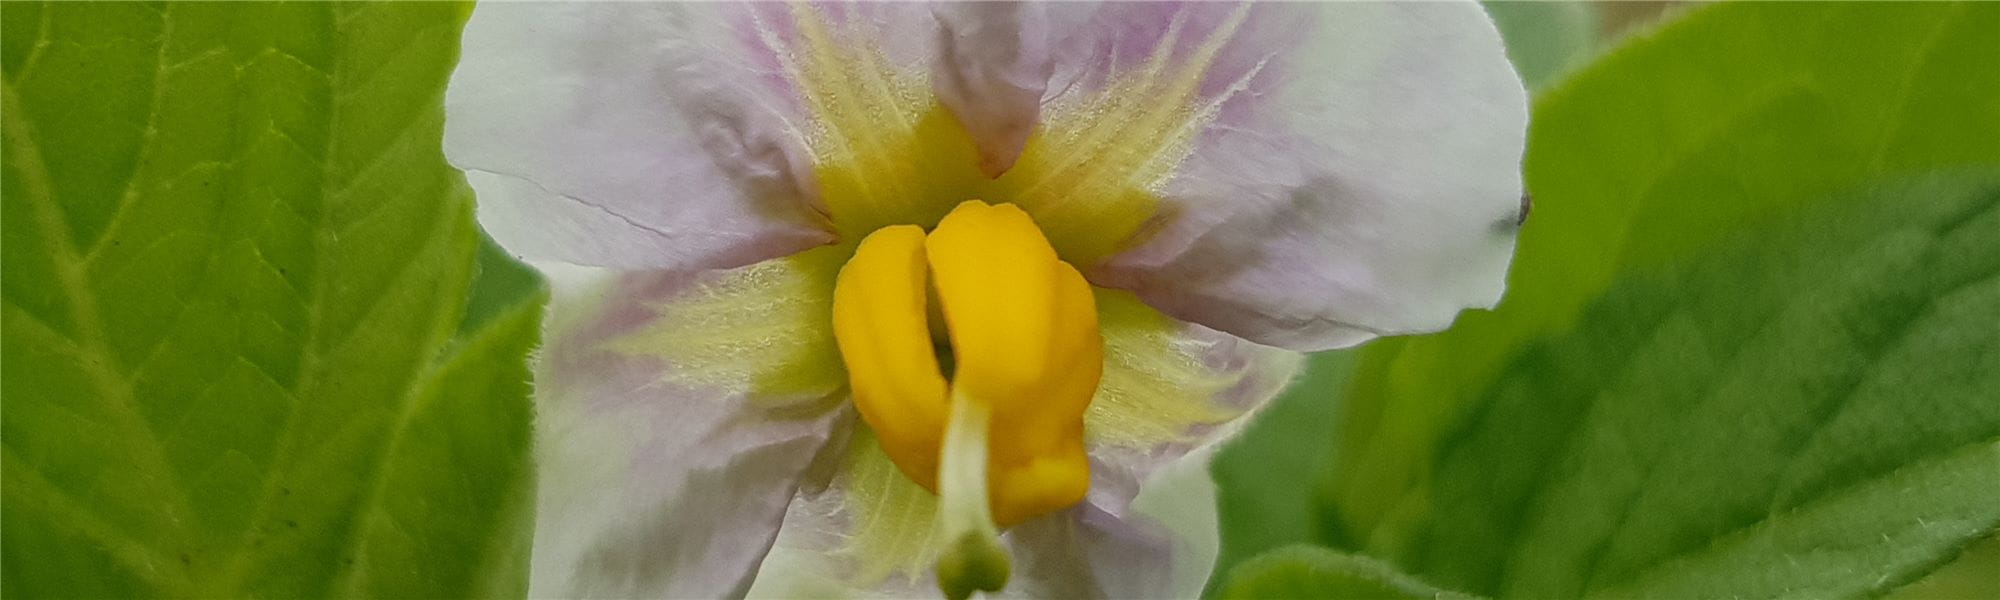 Potato flower